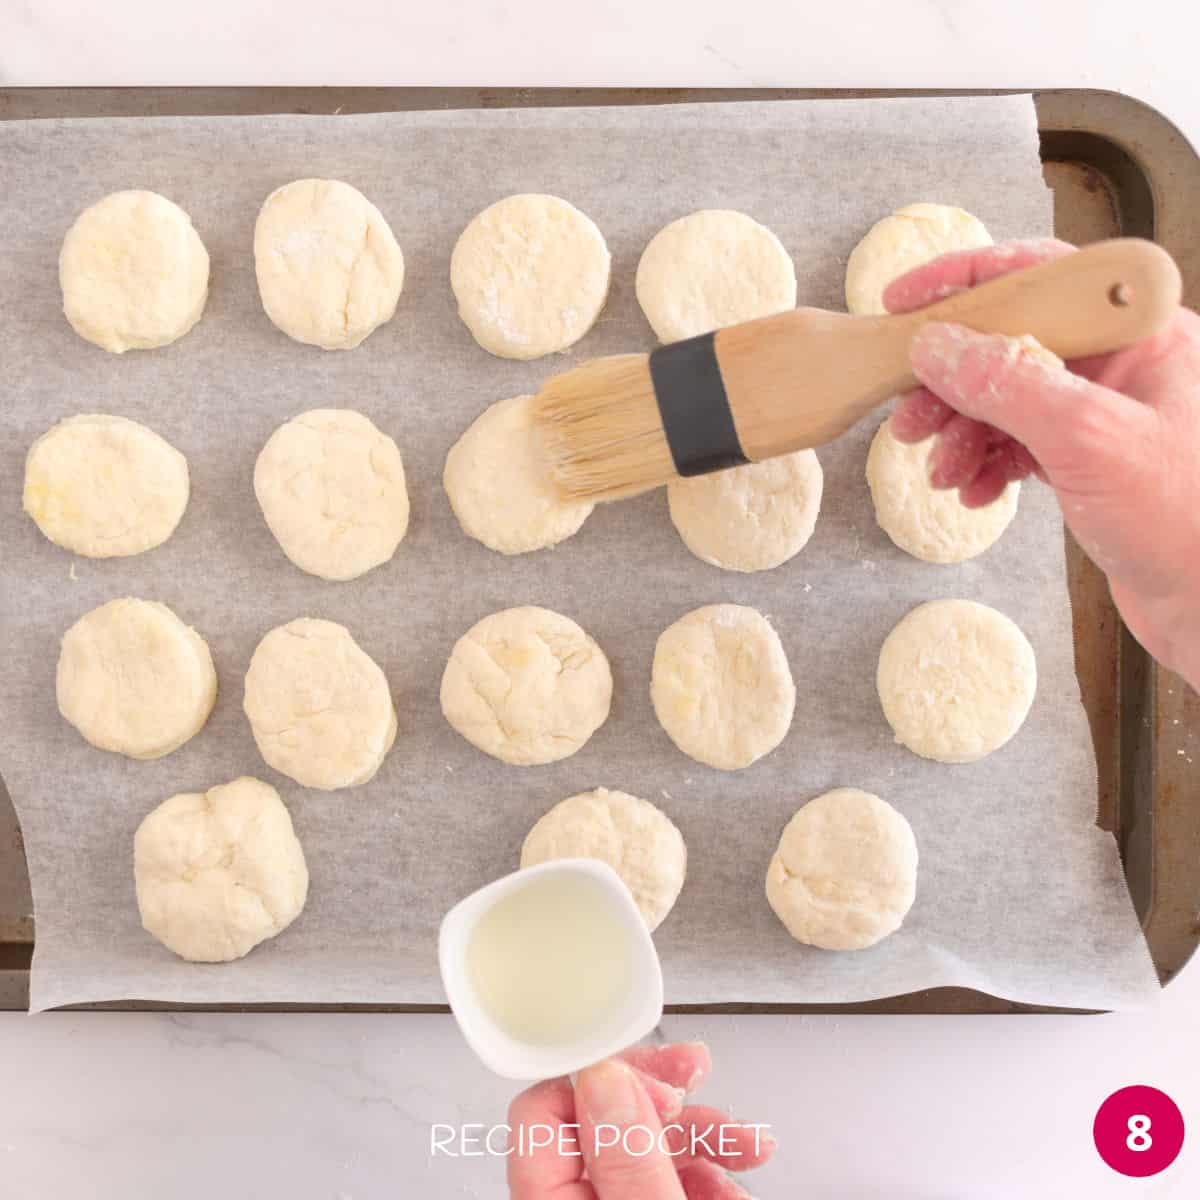 Brushing scone dough with milk.